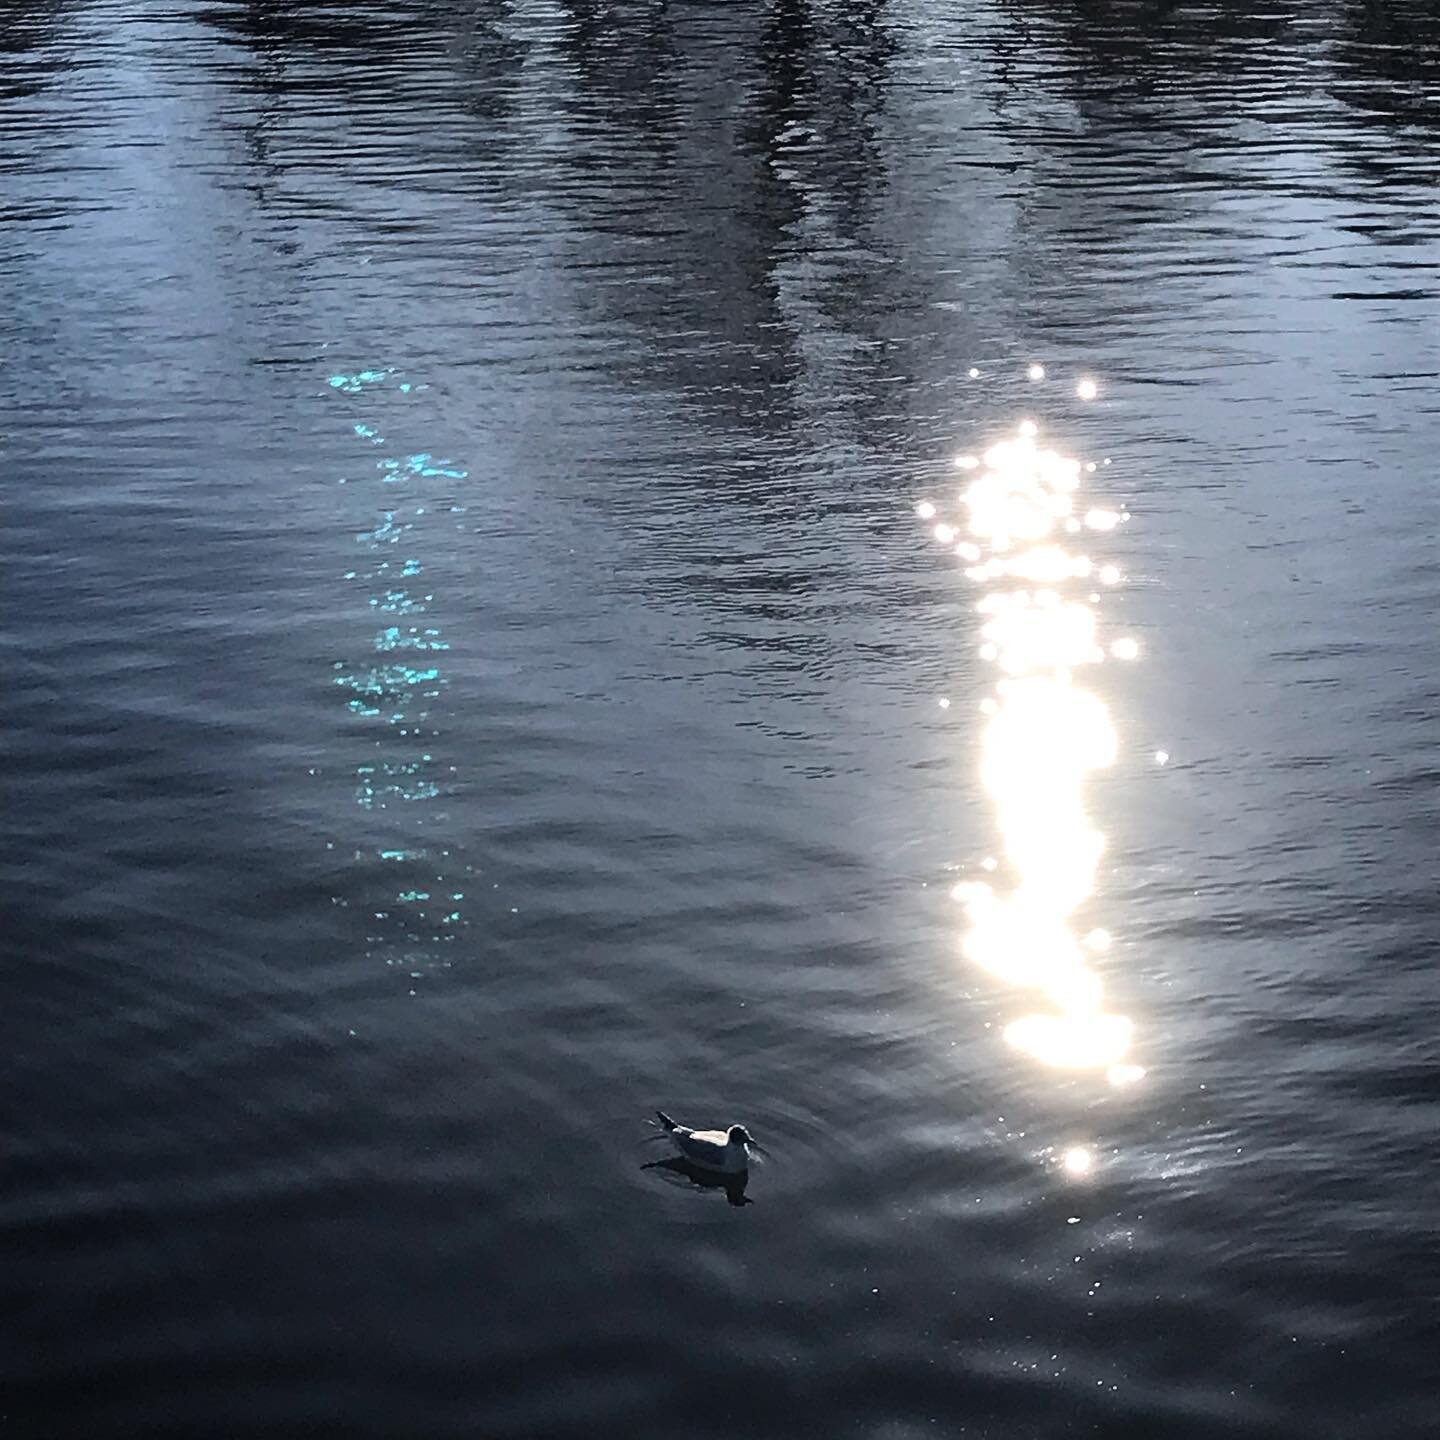 #meeuw #lekkerdrijvenendobberen #licht #entrepotdok #amsterdam #blokkieom #water #seagull #sunlight #reflection